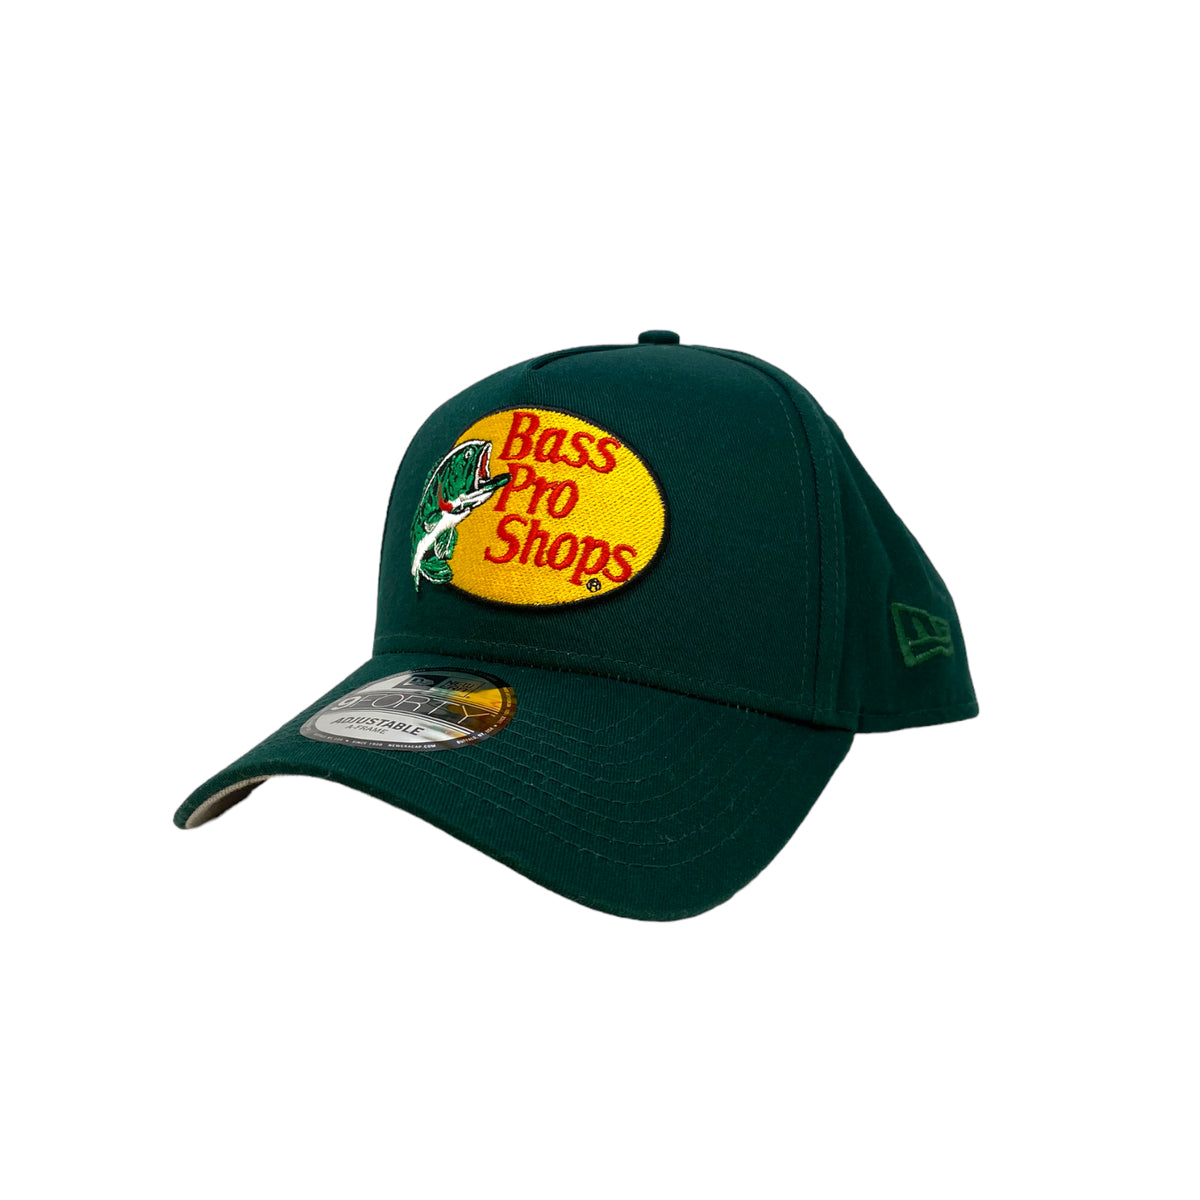 Bass Pro Shops Trucker Hat, Adjustable - La Paz County Sheriff's